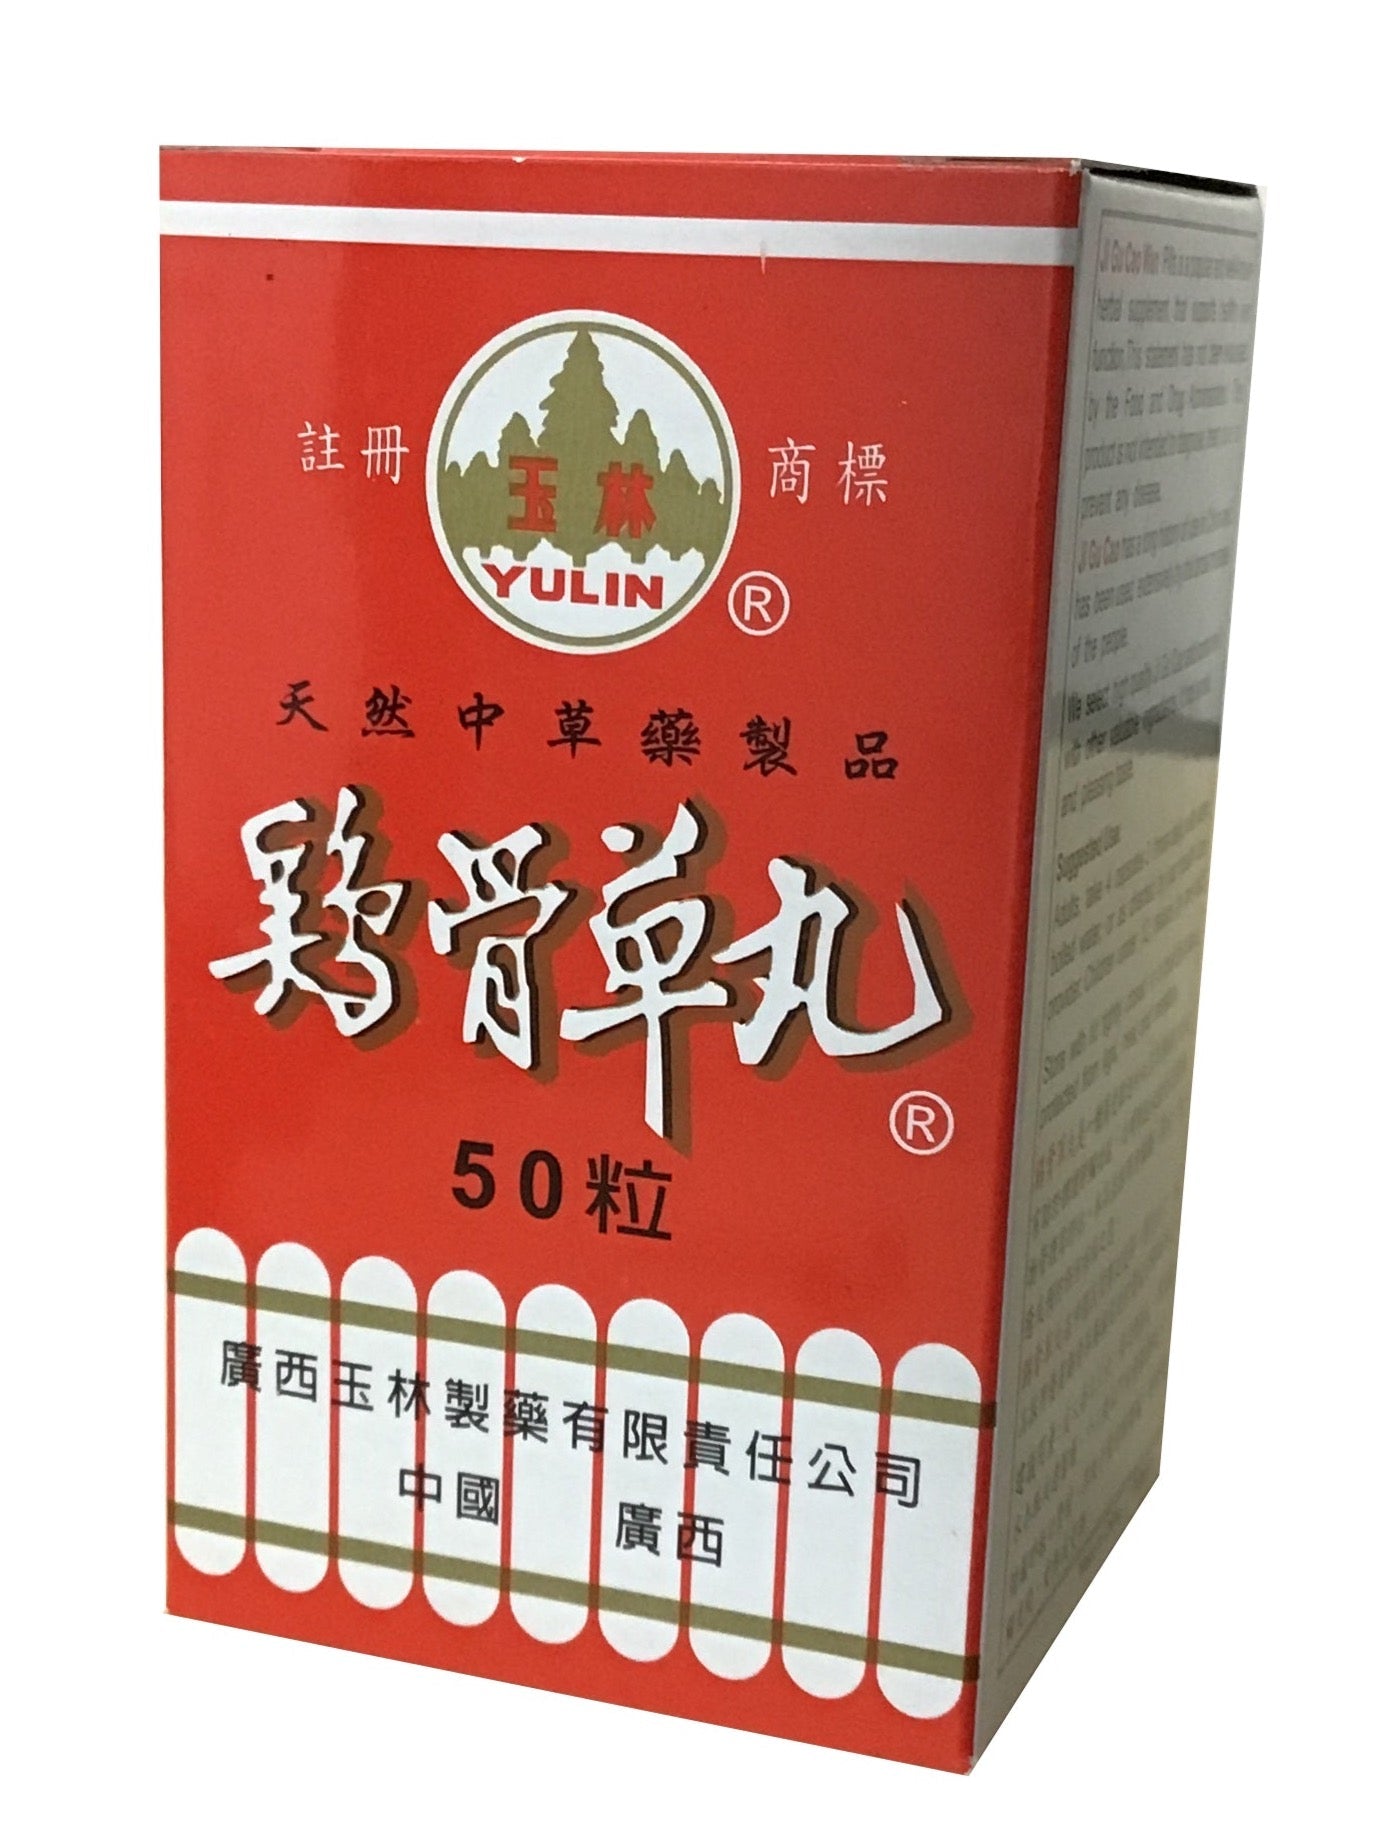 Jigucao Wan (50 Pills) 玉林牌 鸡骨草丸